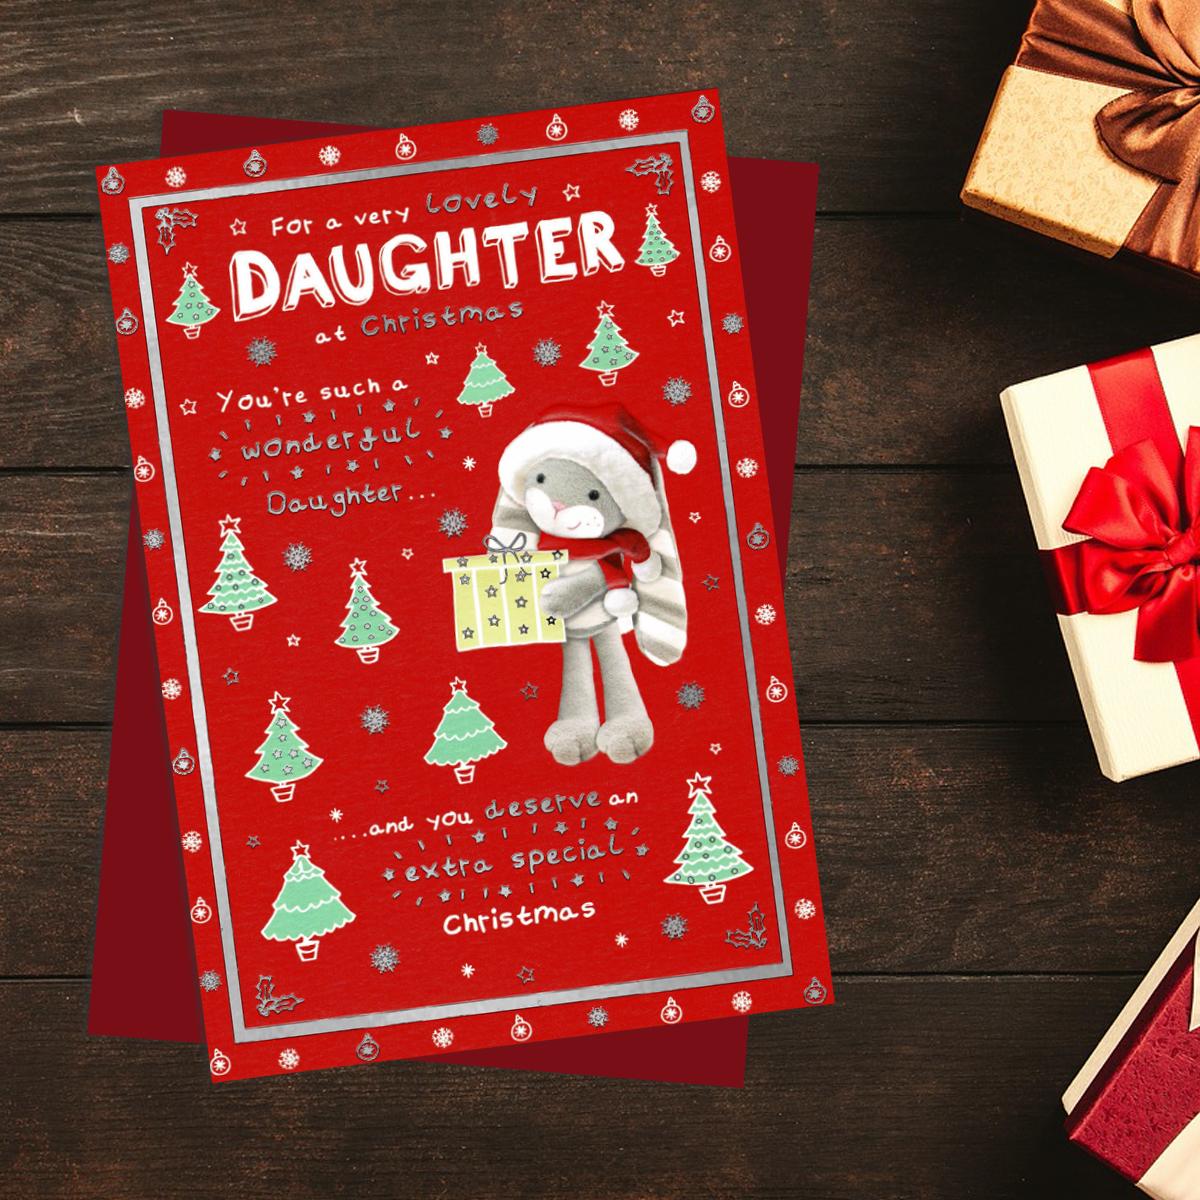 Daughter Hun Bun Christmas Card Alongside Its Red Envelope